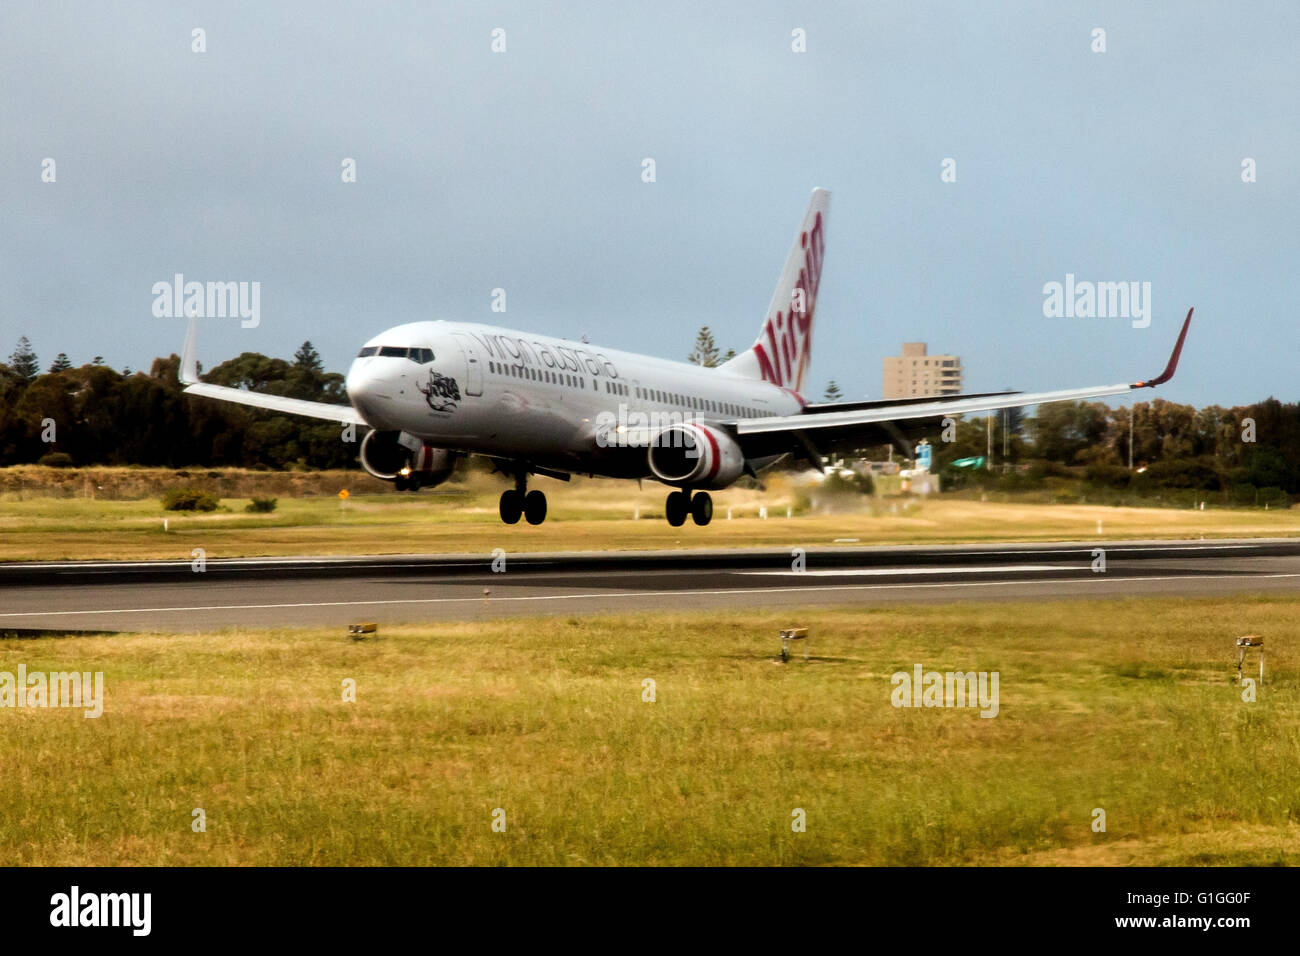 Virgin Australia aircraft landing at Coolangatta airport on the Gold Coast of Queensland Australia Stock Photo